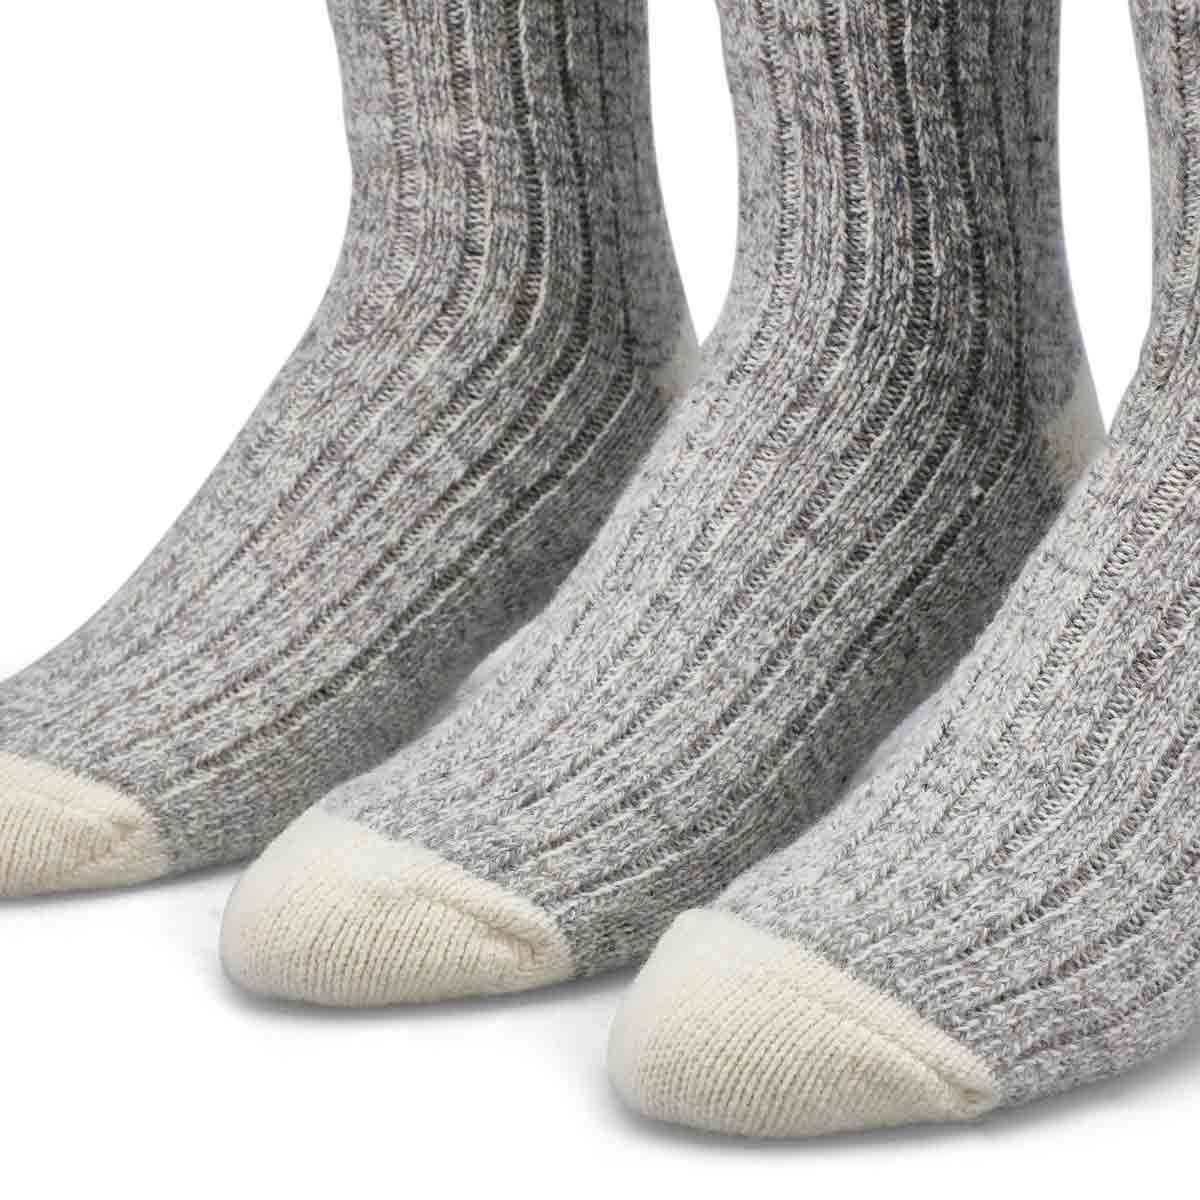 Men's DURAY grey/white wool blend sock - 3pk